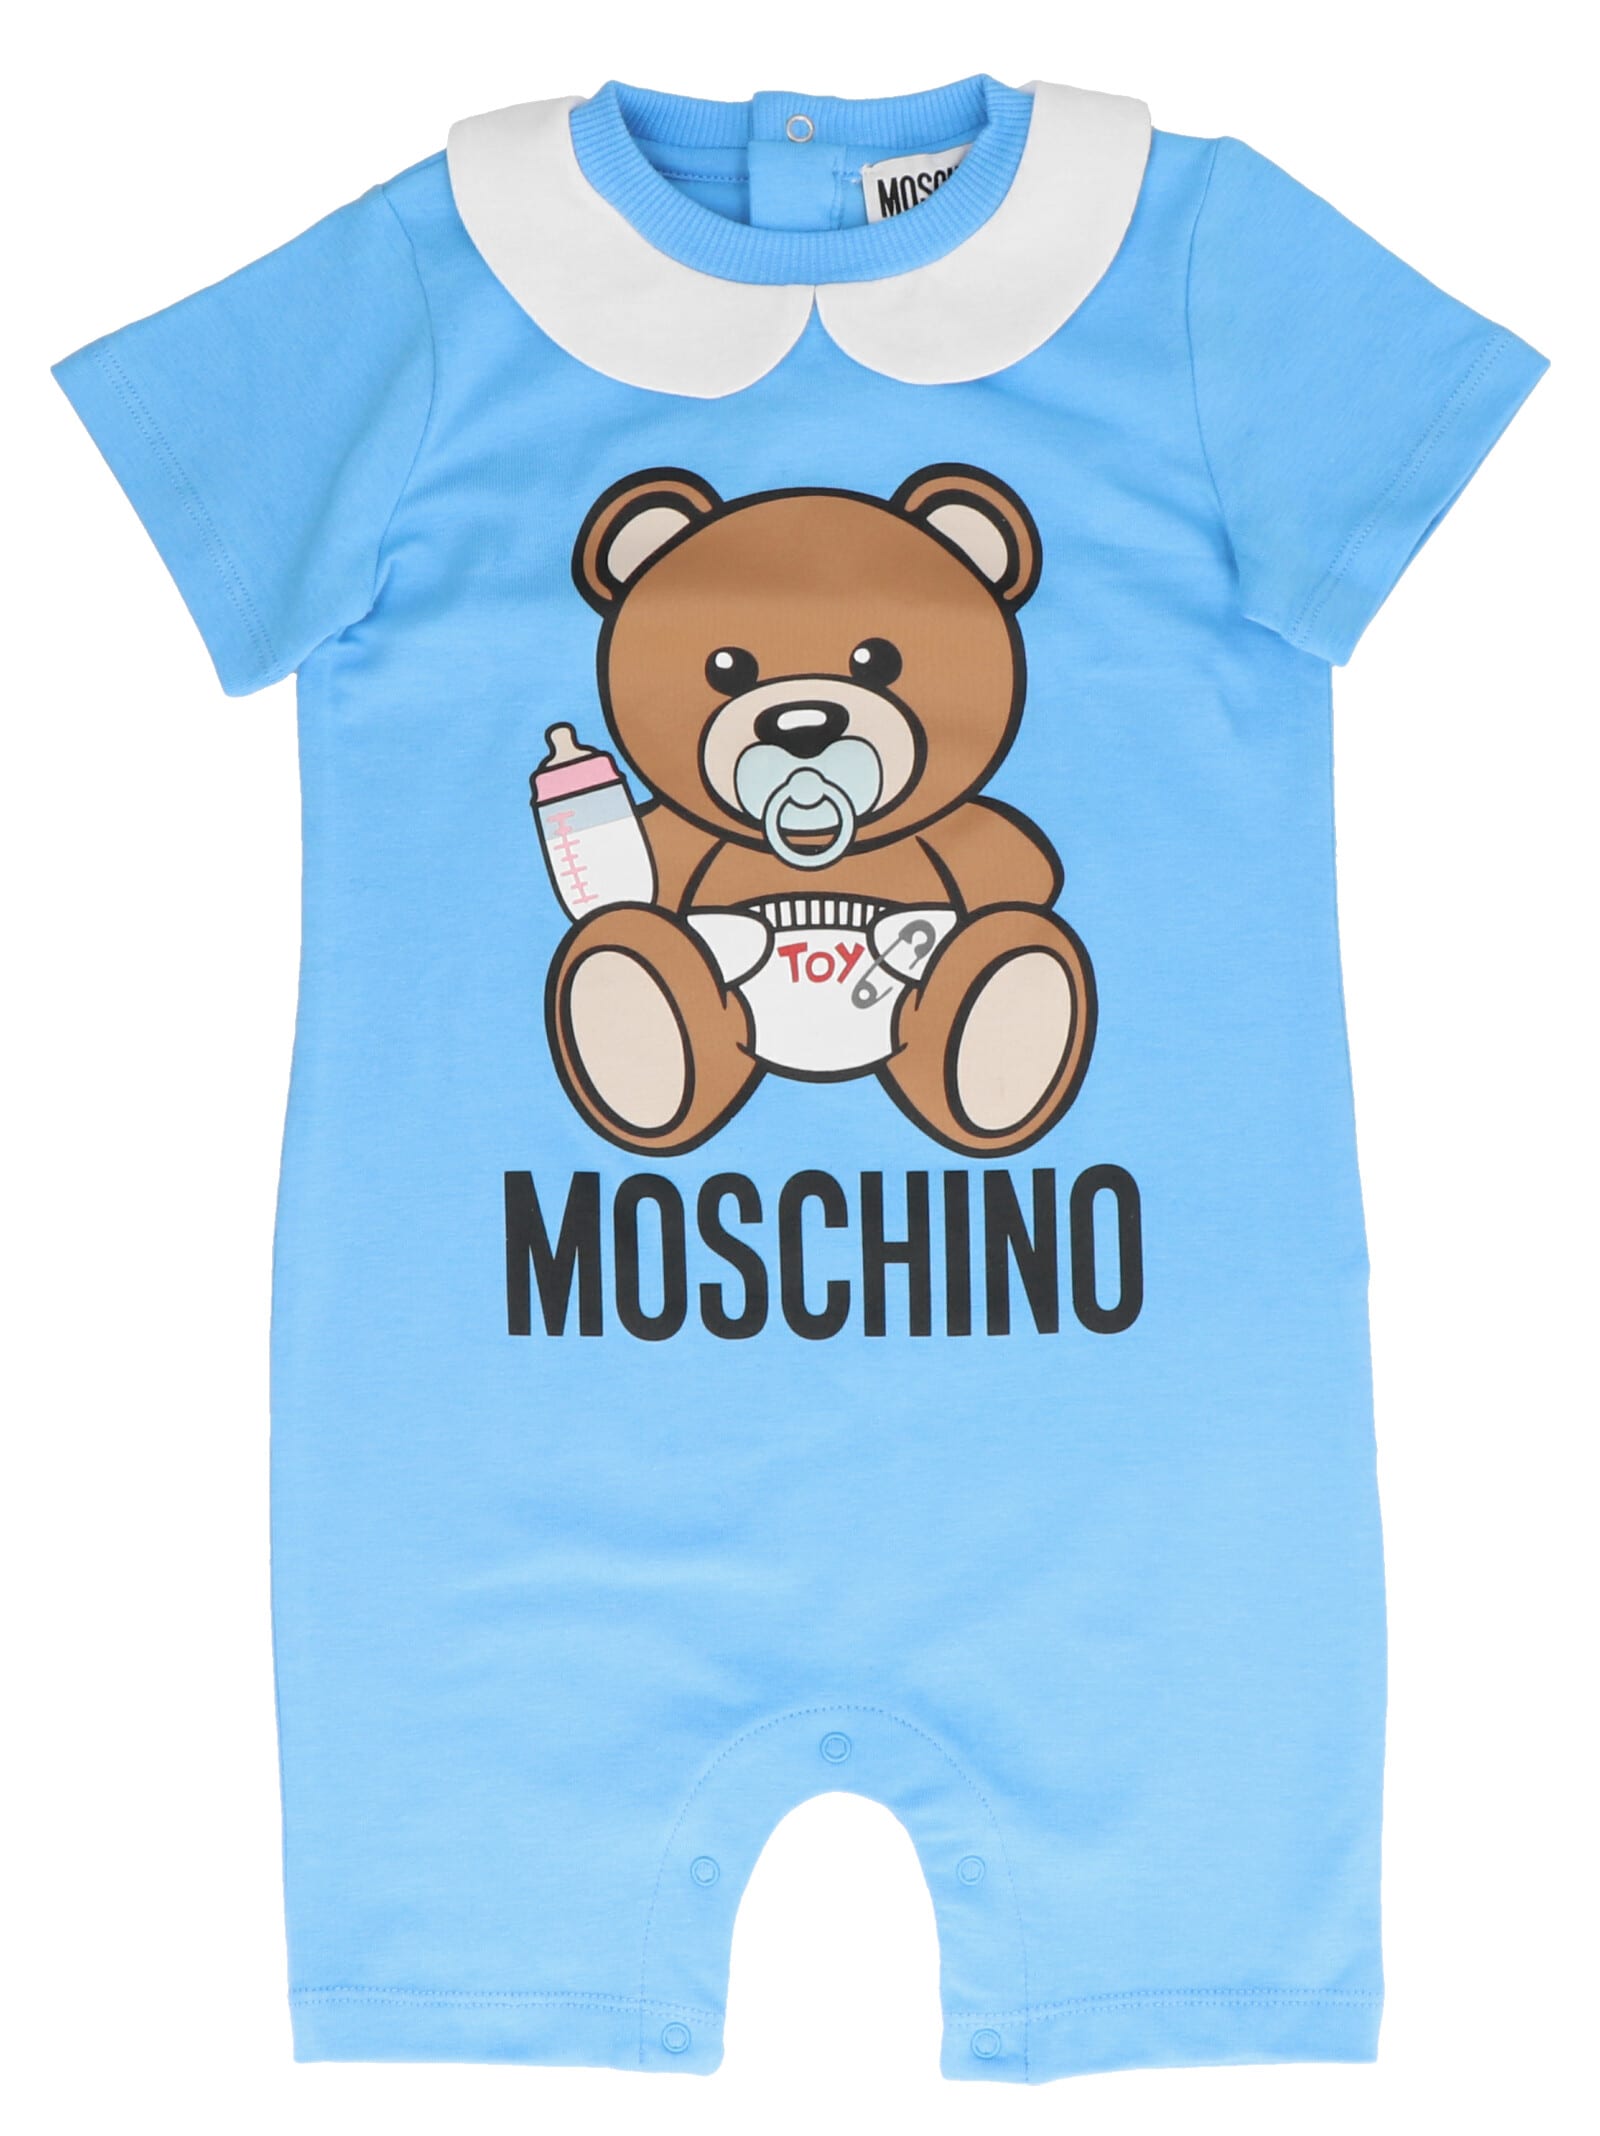 moschino baby wear